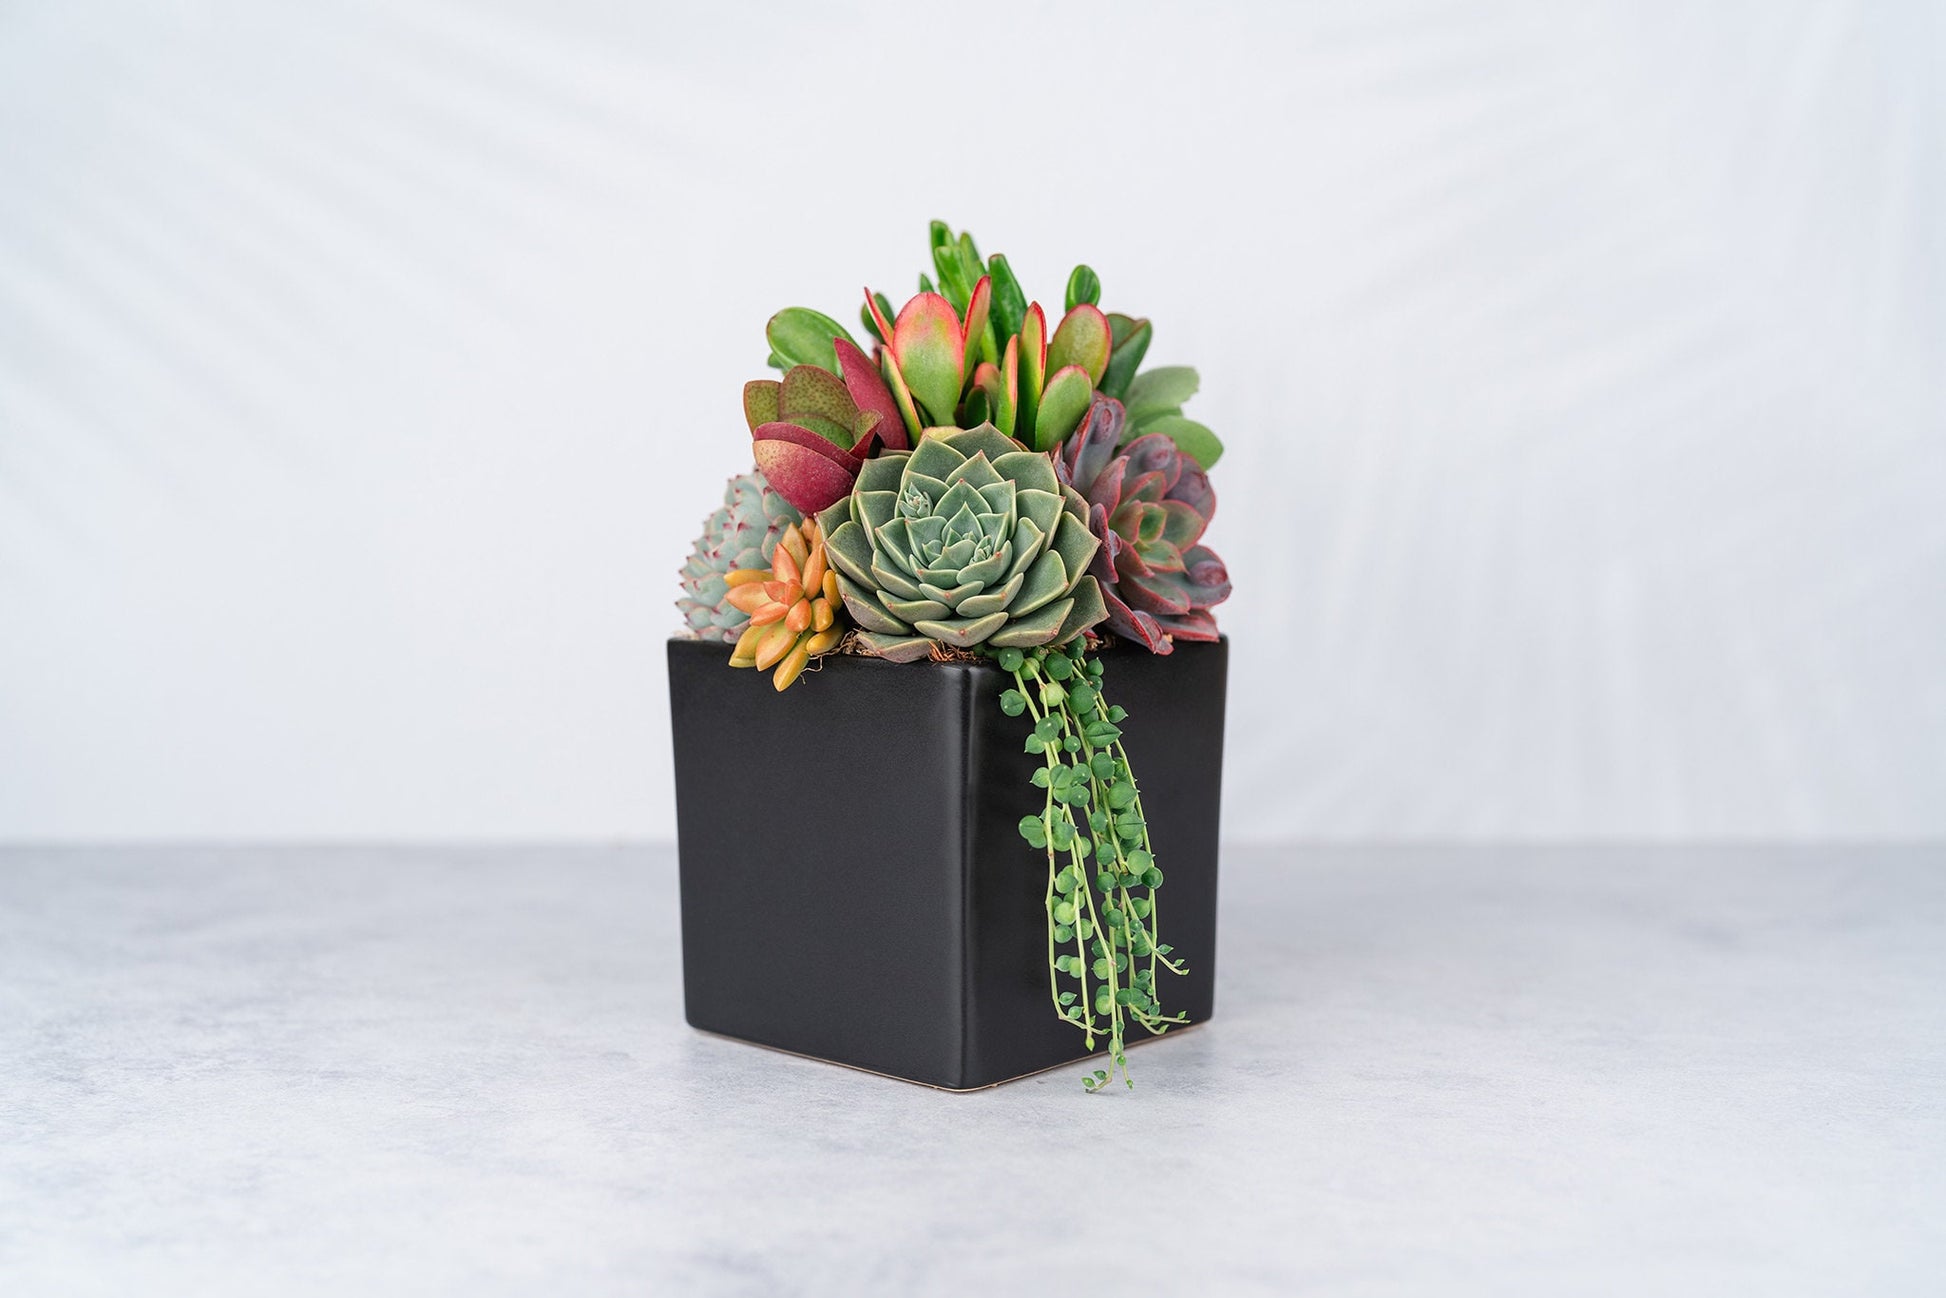 Black Cube Ceramic Succulent Arrangement Planter: Modern Living Succulent Gift or Centerpiece for Weddings & Events